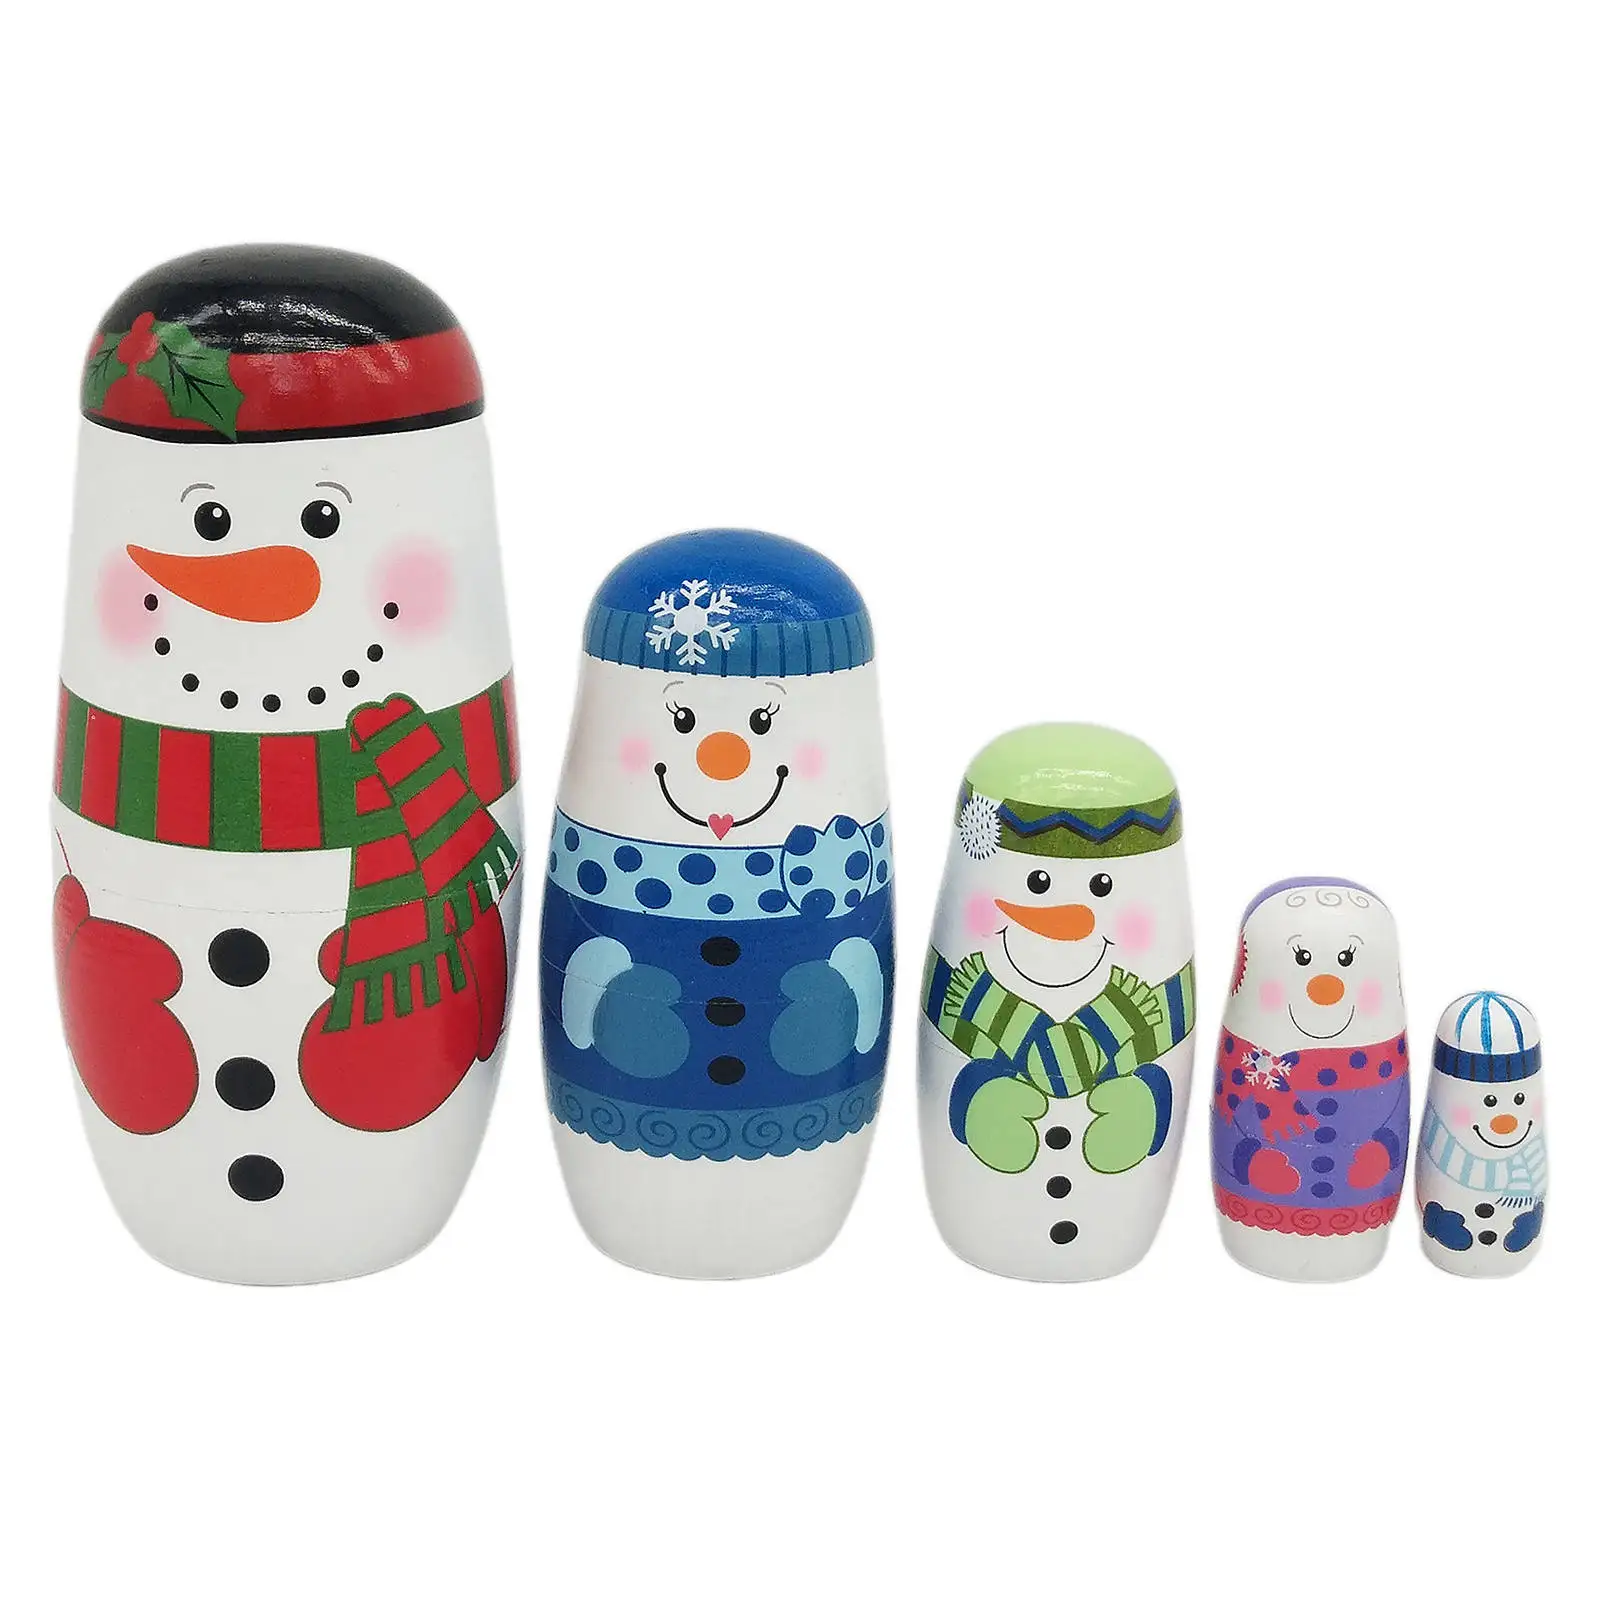 5Pcs Set Snowman Wooden Stacking Toys, Matryoshka Russian Nesting Dolls for